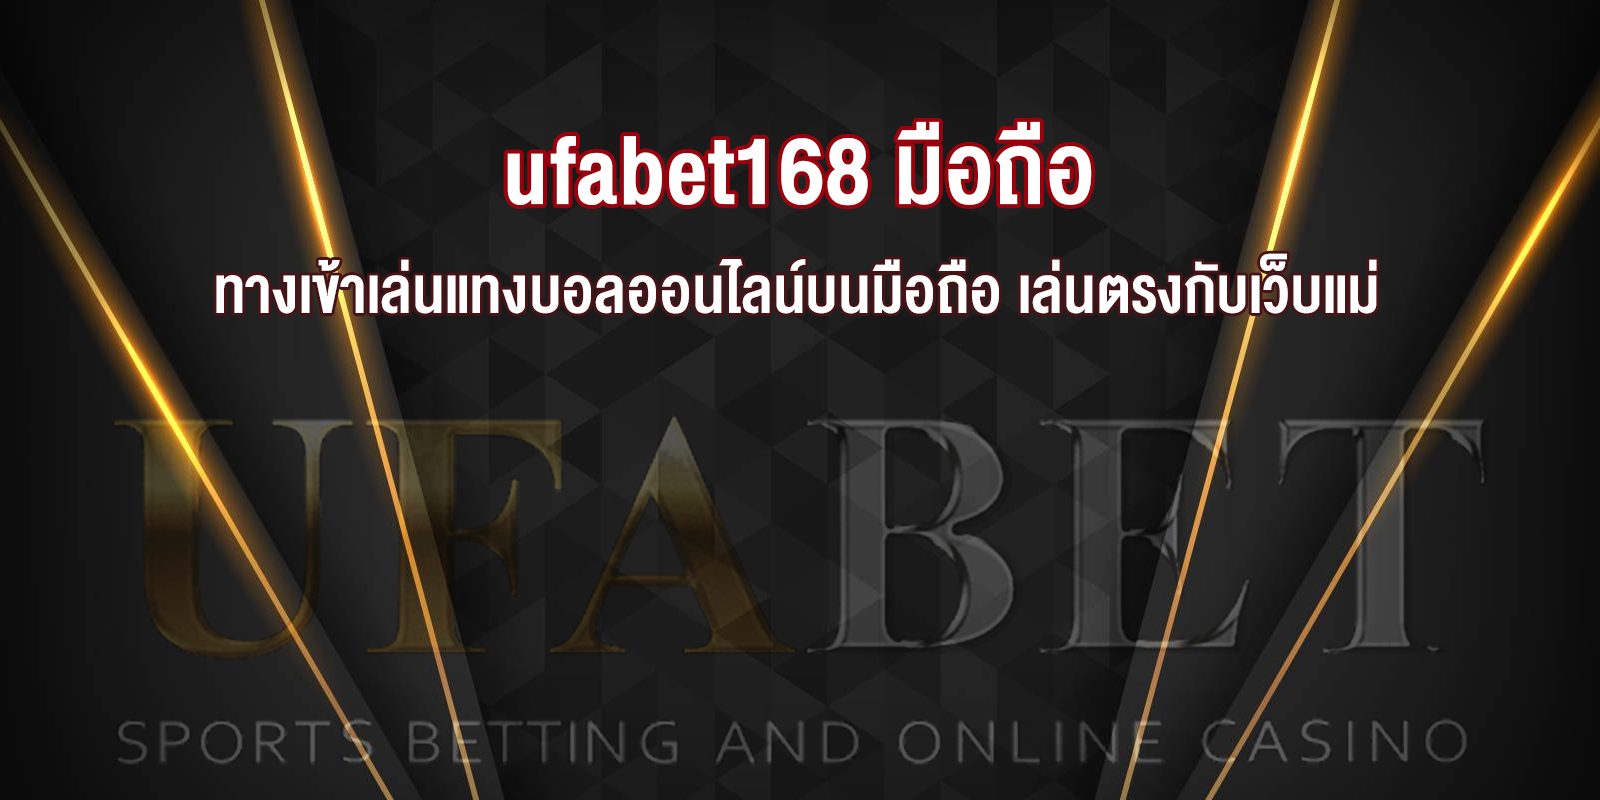 ufabet168 มือถือ ทางเข้าเล่นแทงบอลออนไลน์บนมือถือ เล่นตรงกับเว็บแม่